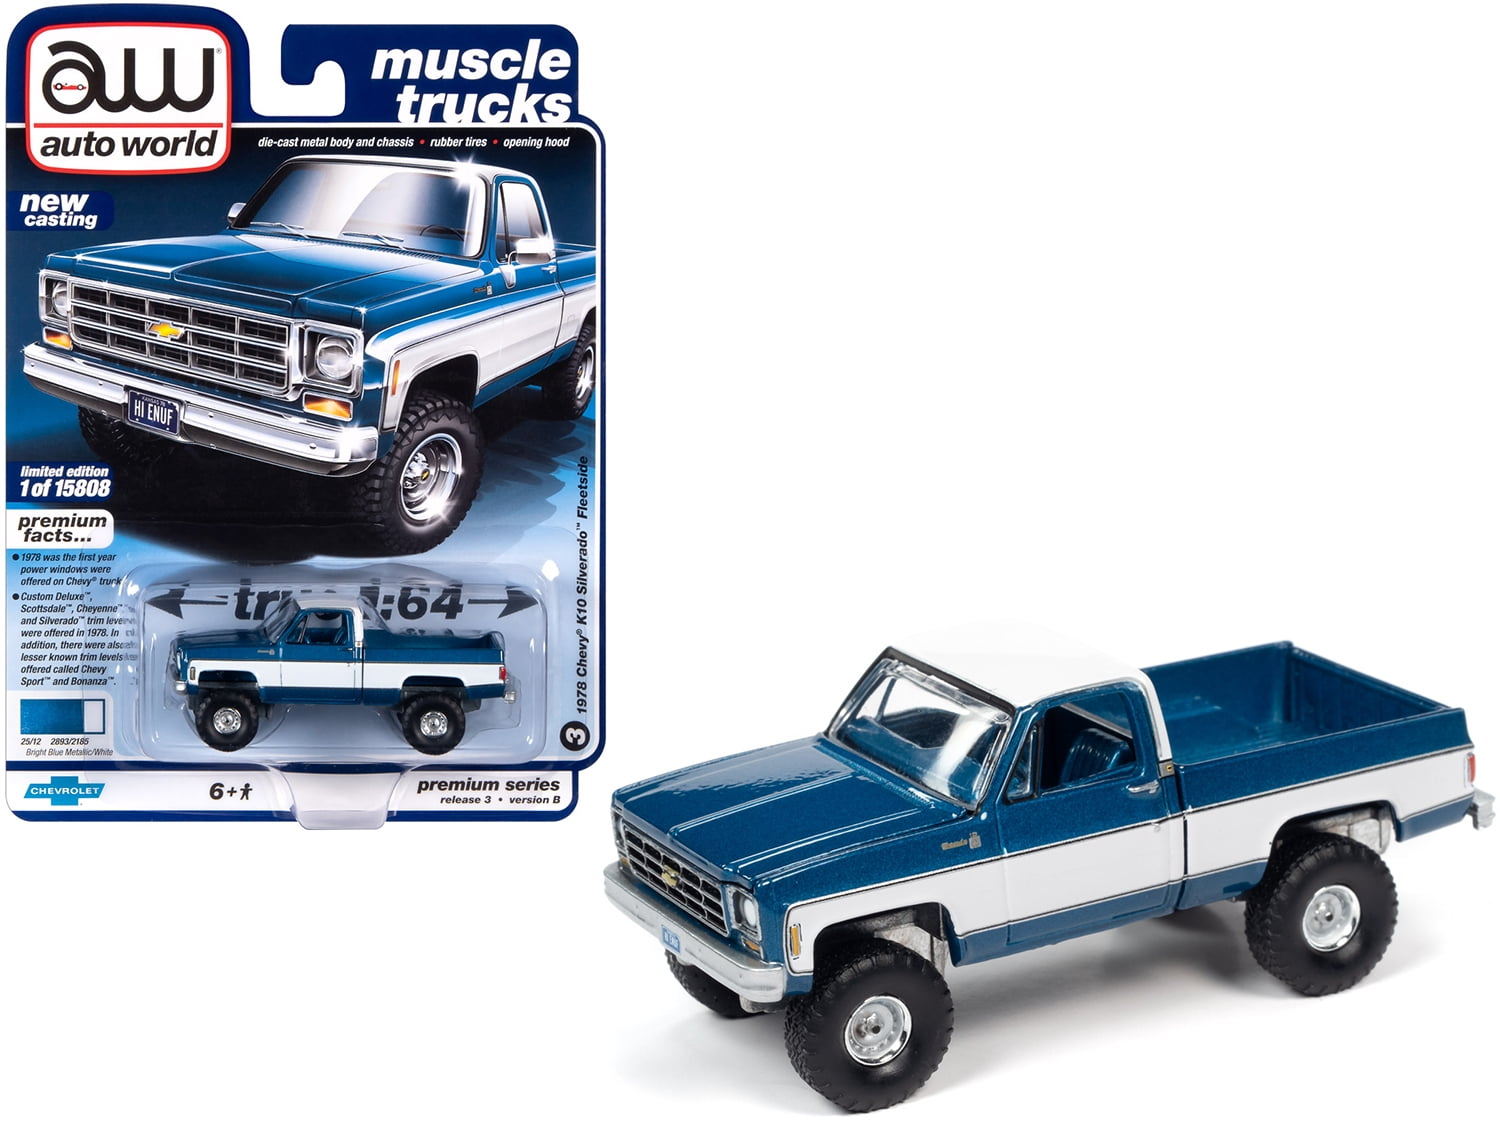 Autoworld 1/64 diecast Model of 1978 Chevy K10 Silverado Fleetside Pickup Truck Blue Iridescent Metallic & White Ltd Ed to 15808 pcs 64262-AWSP044 B 